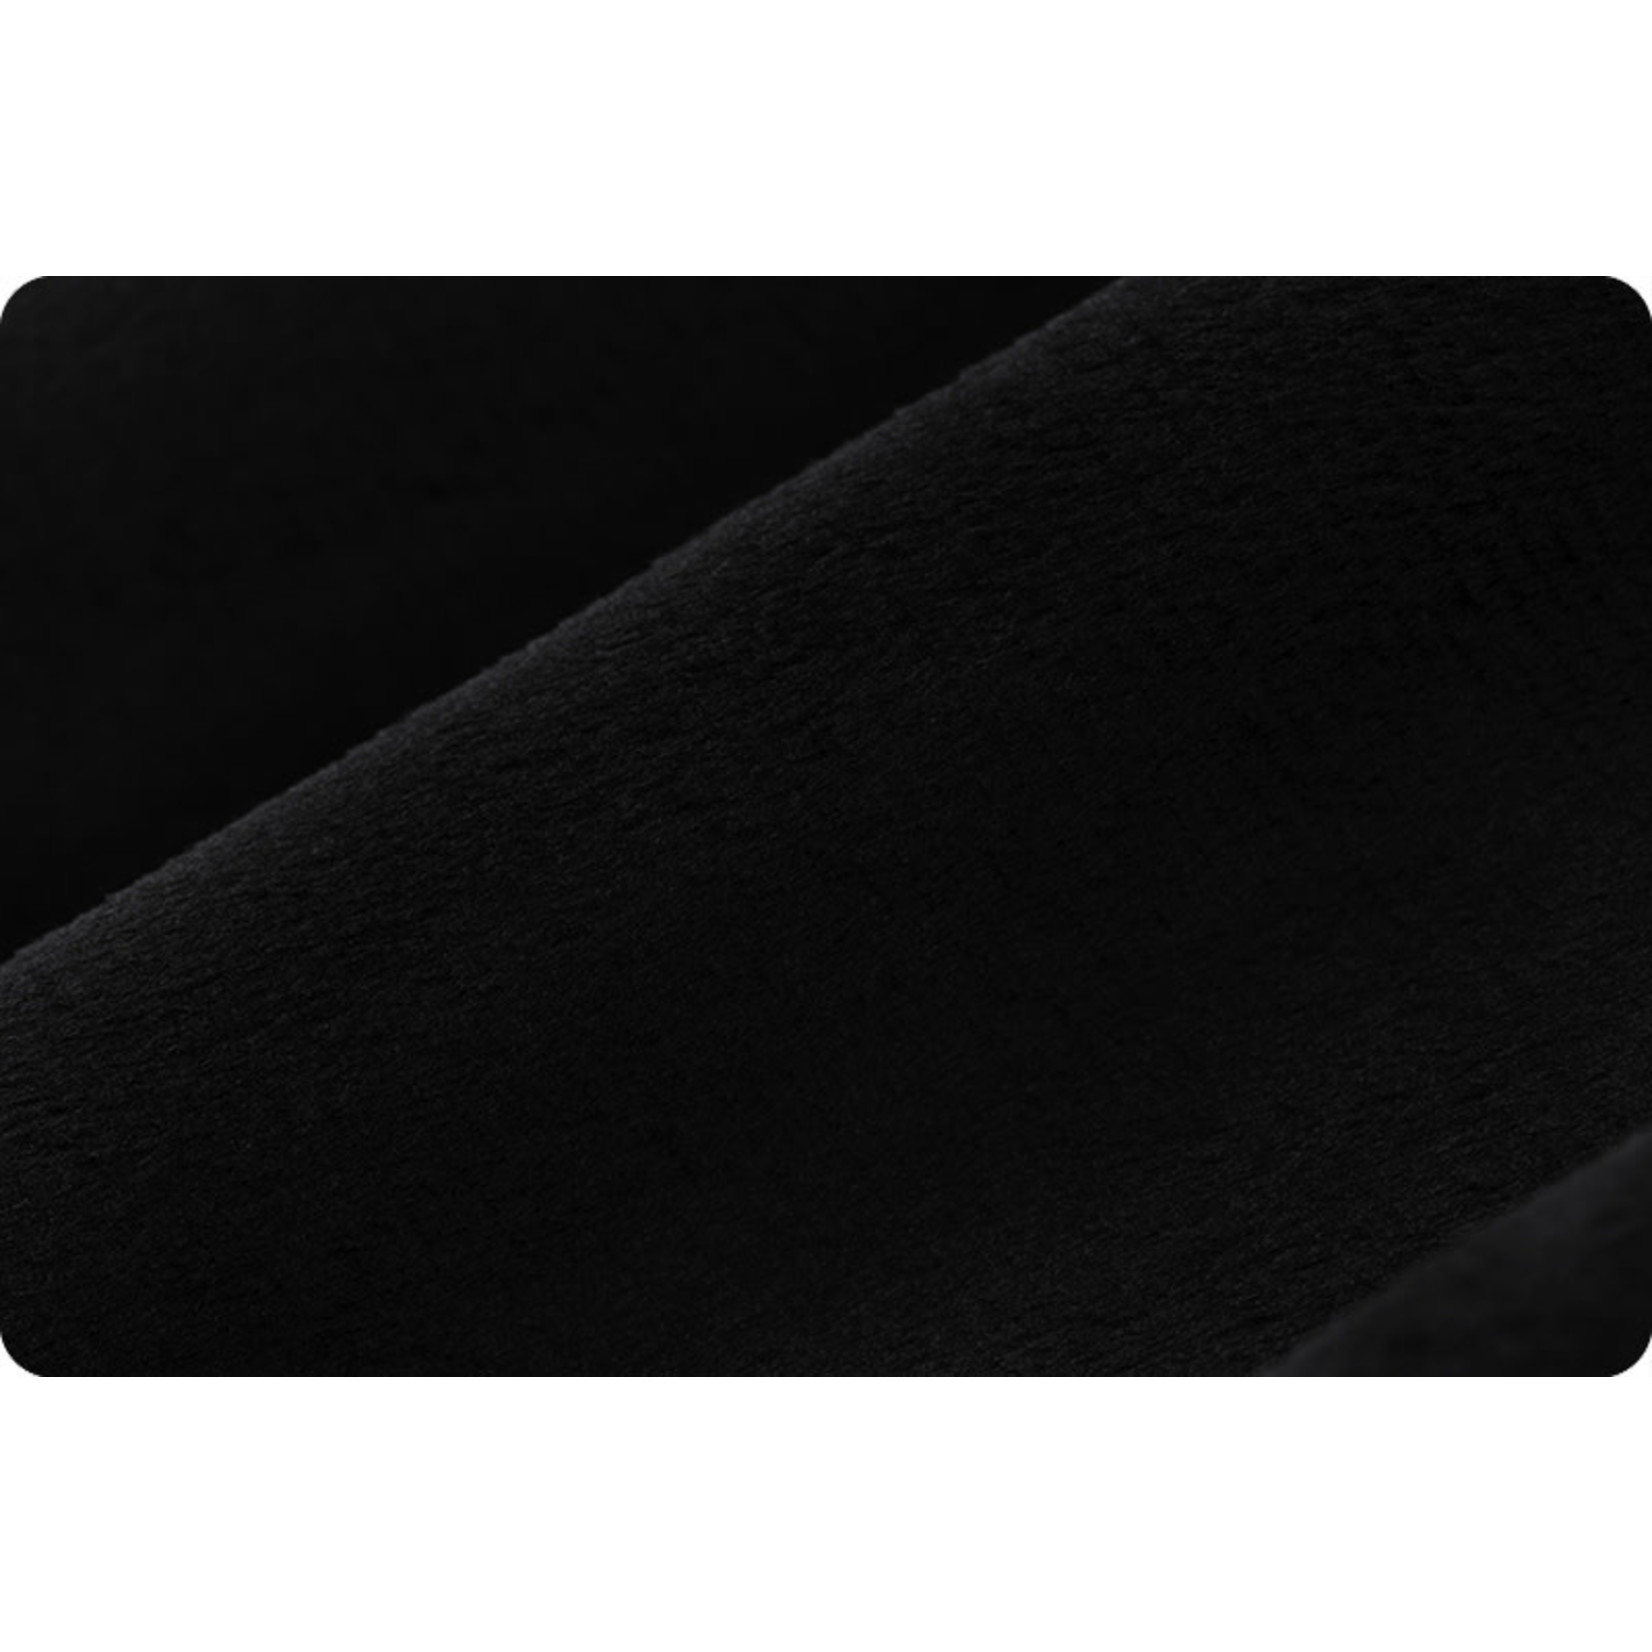 Shannon Fabrics Black Cuddle Minky 60 inches Wide $26/M